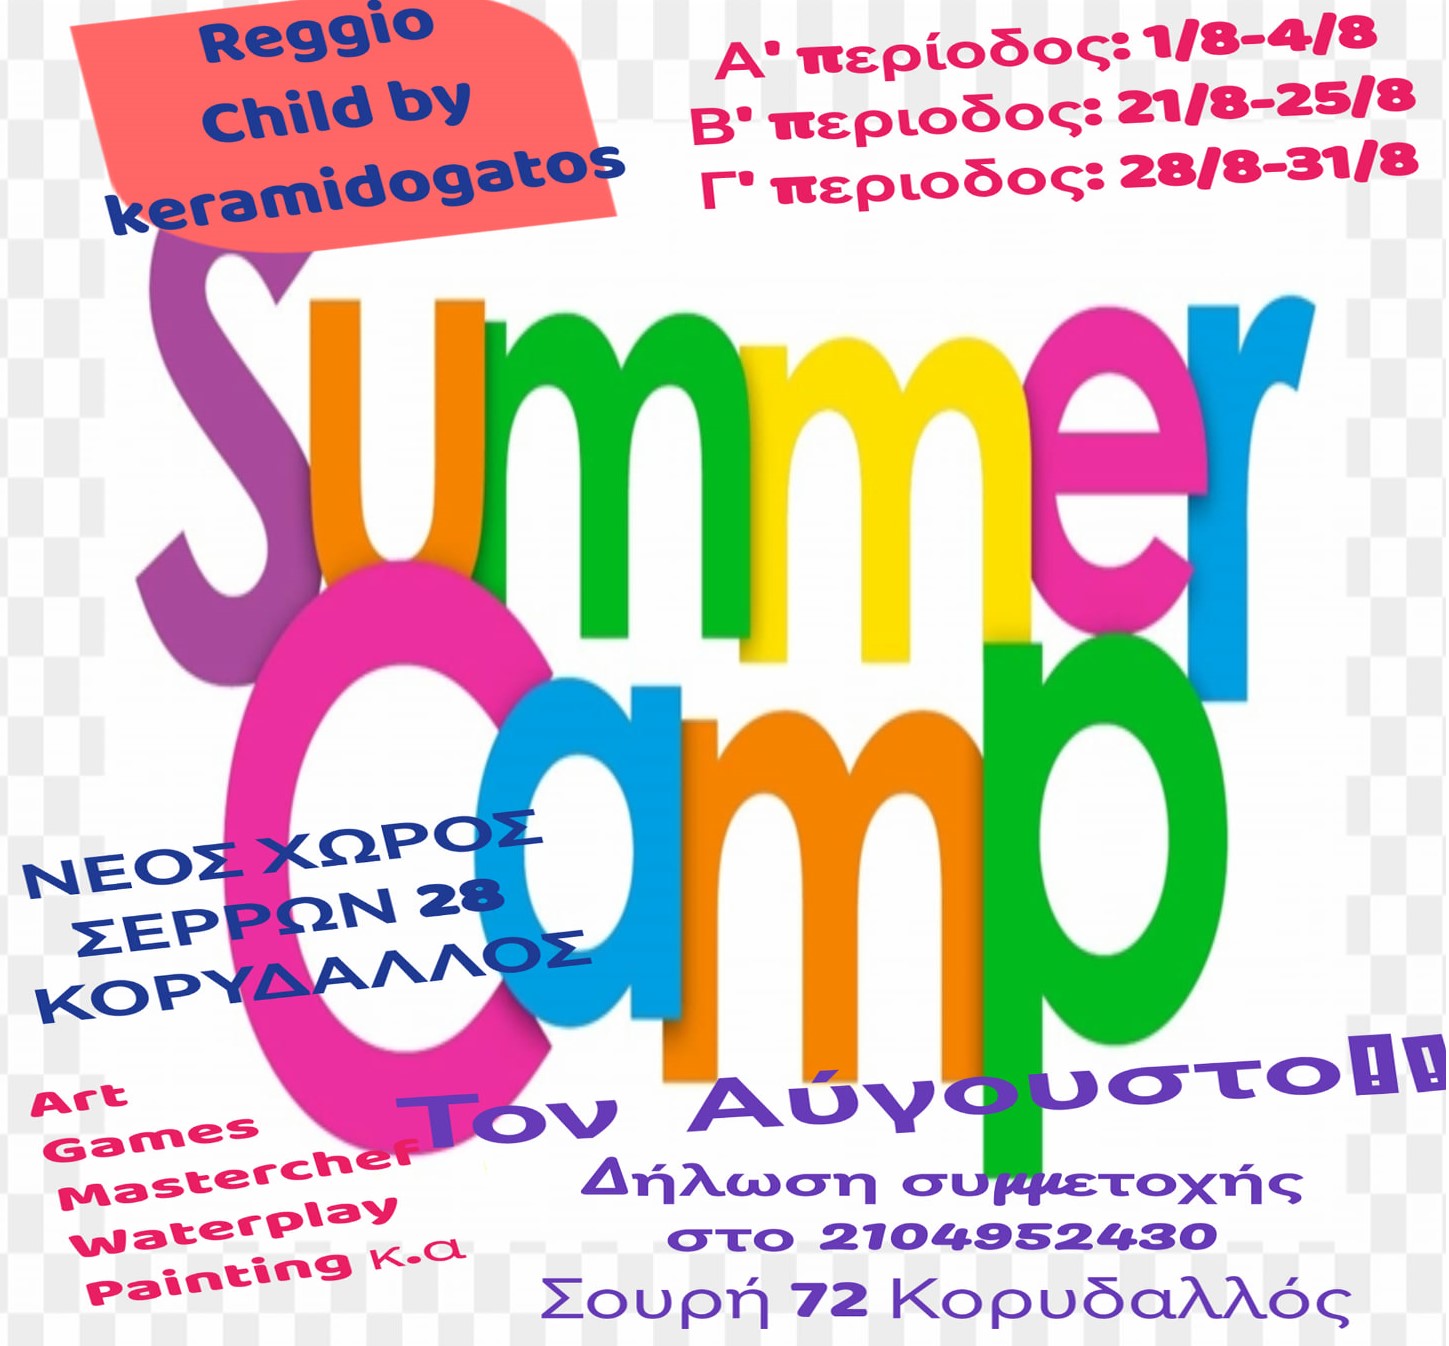 Reggio Child by Κεραμιδόγατος Summer Camp logo